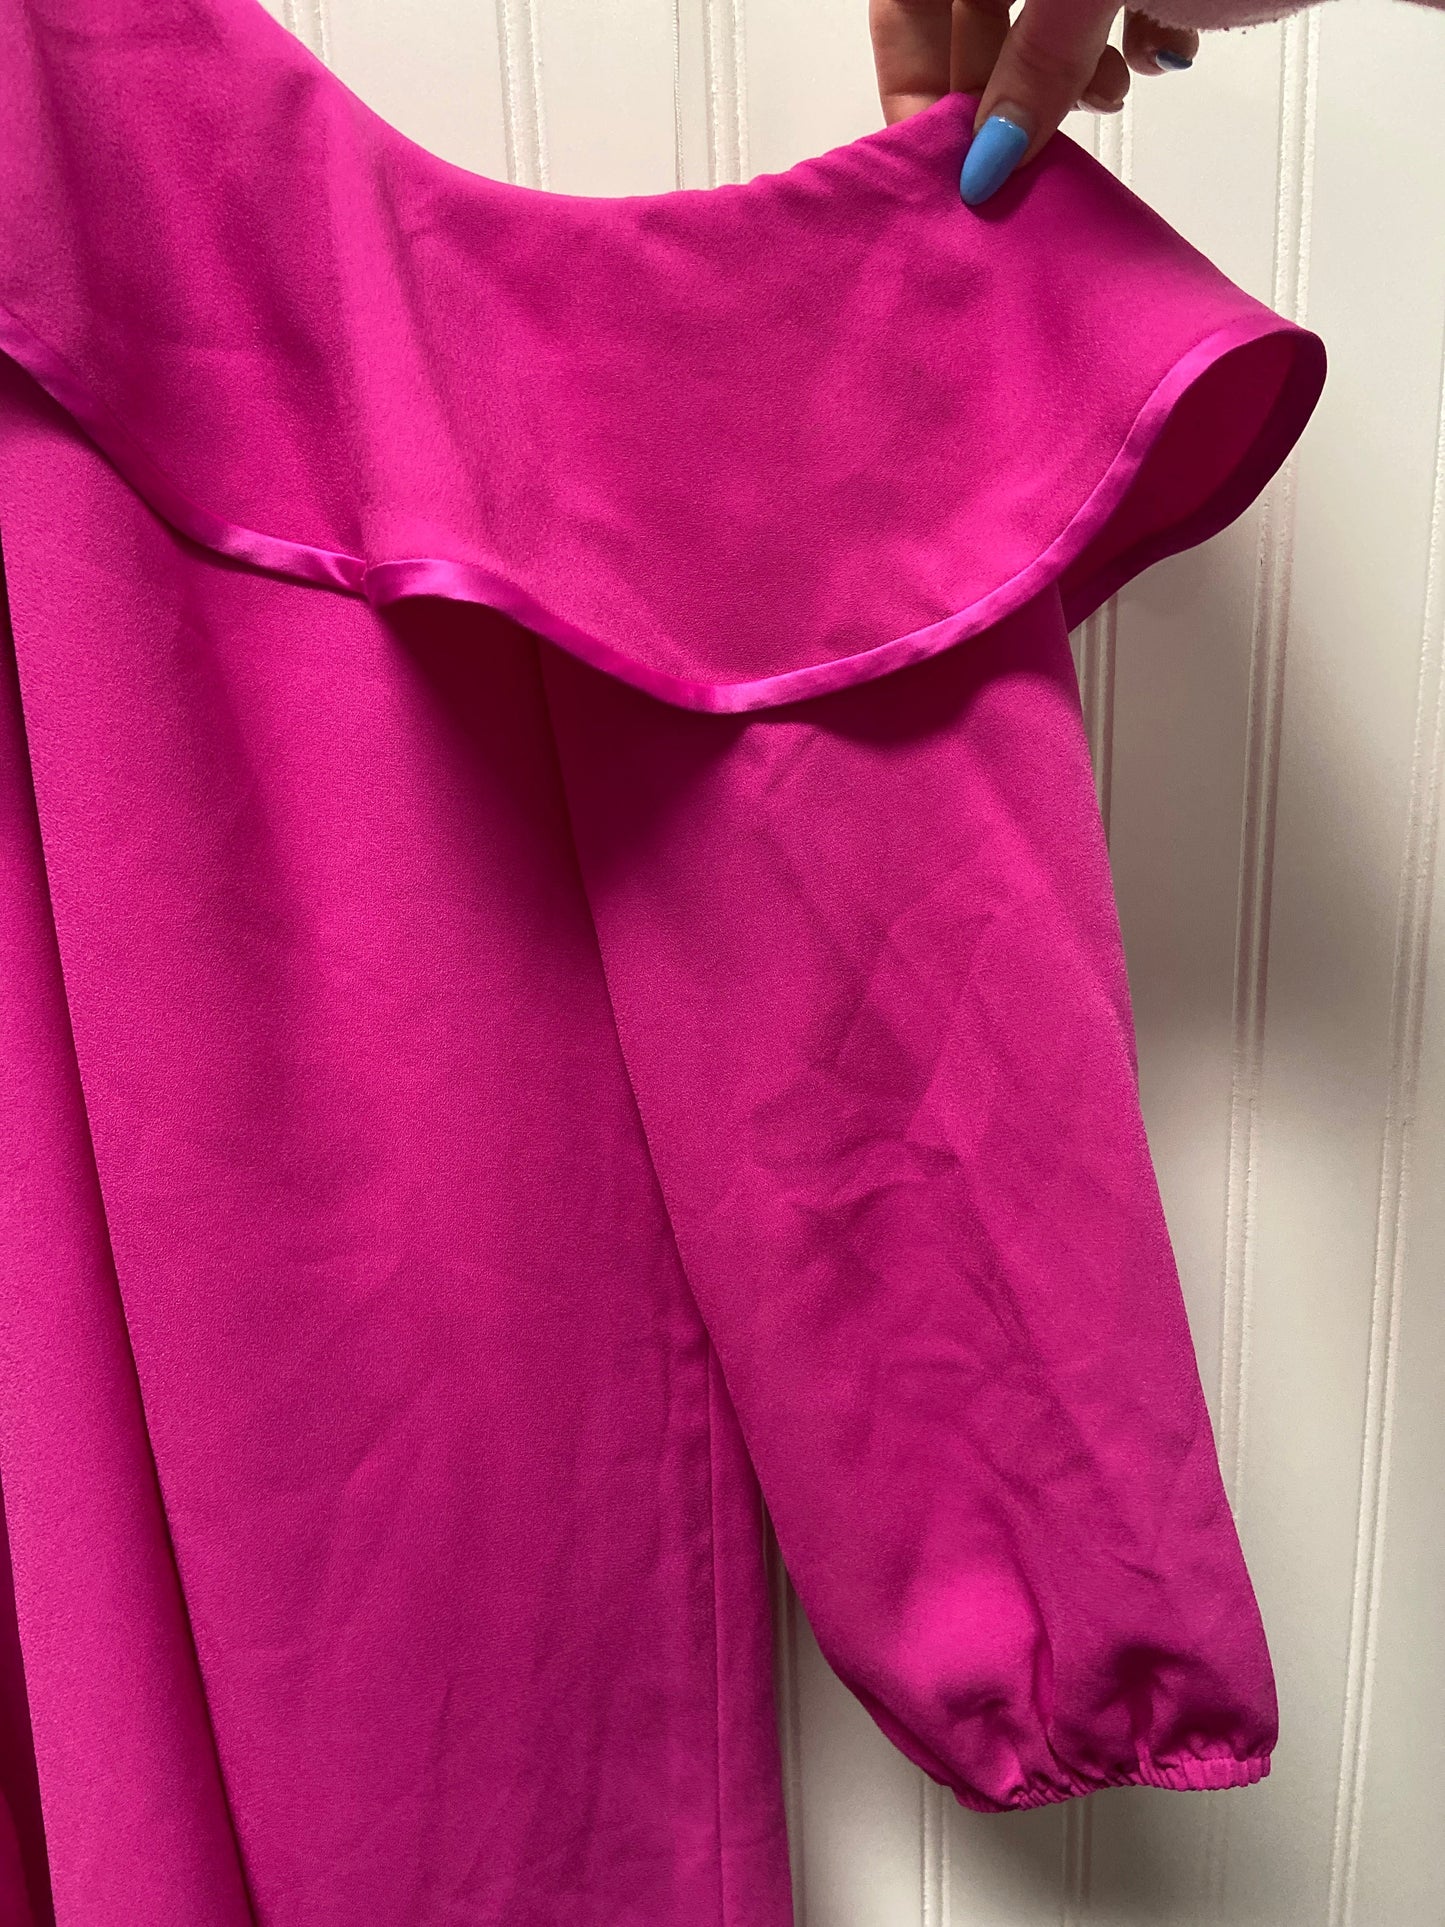 Pink Dress Designer Lilly Pulitzer, Size Xs